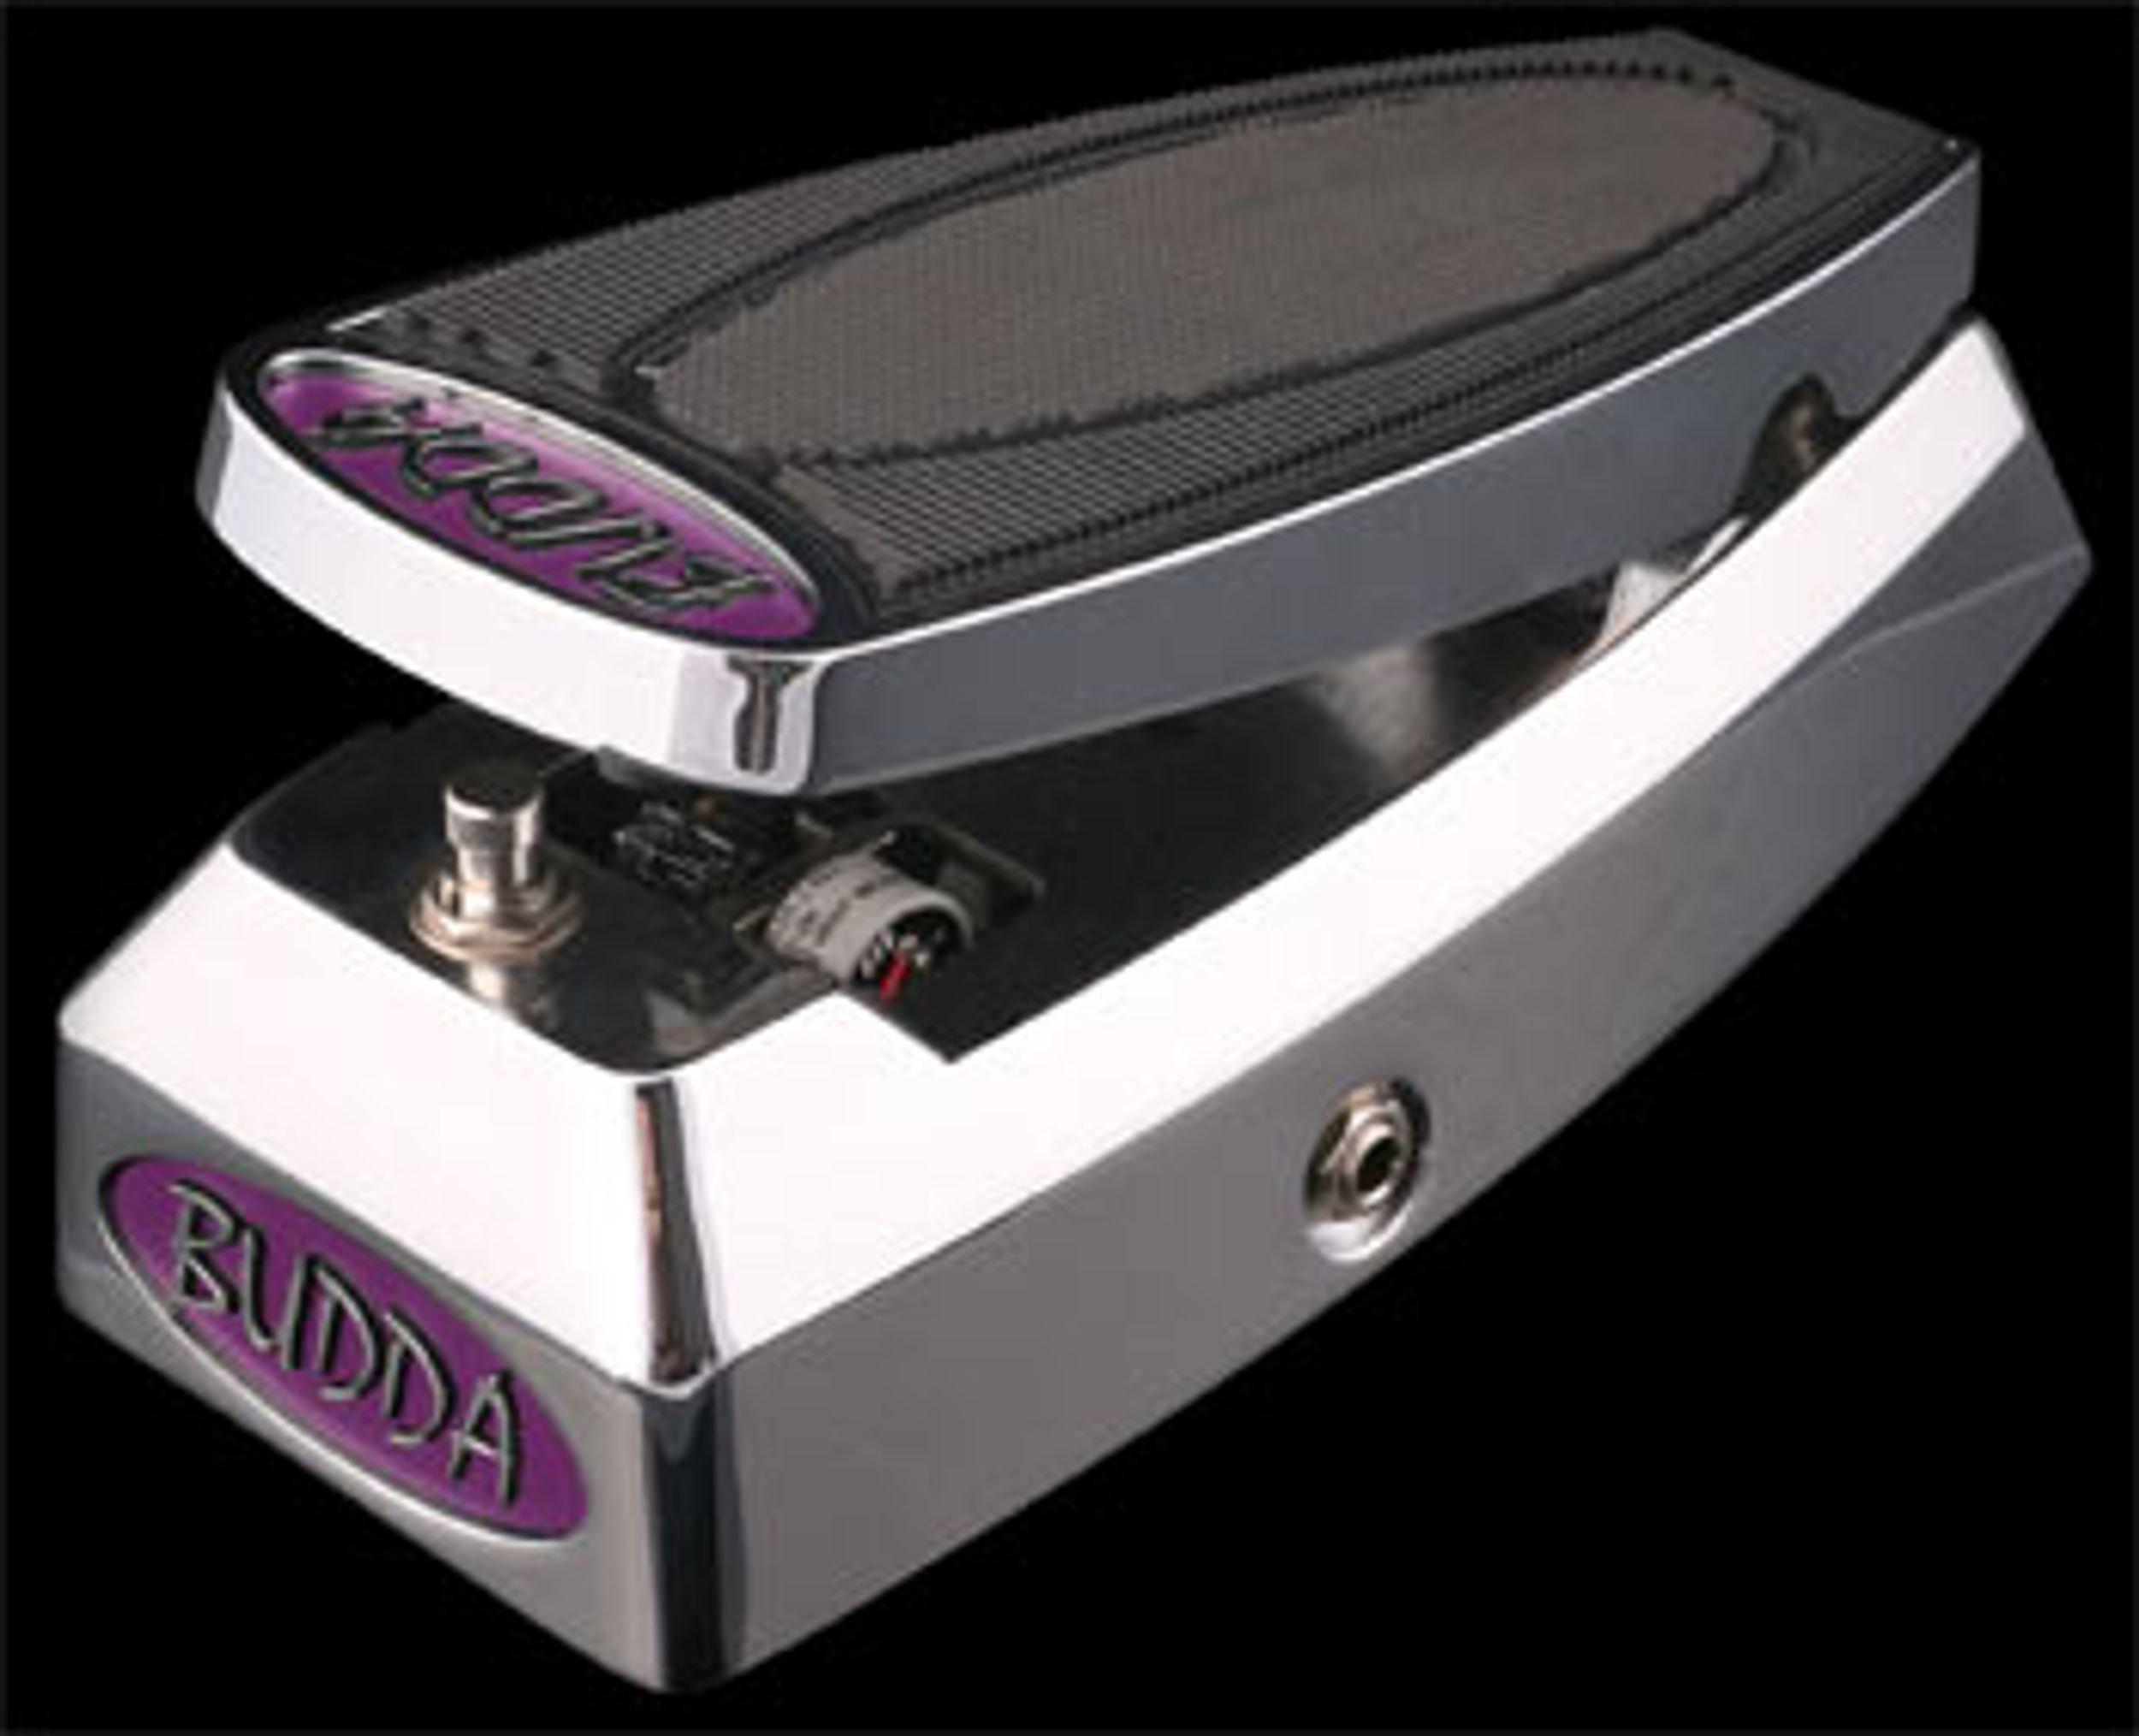 Budda Announces Upgrades to Budwah Pedal